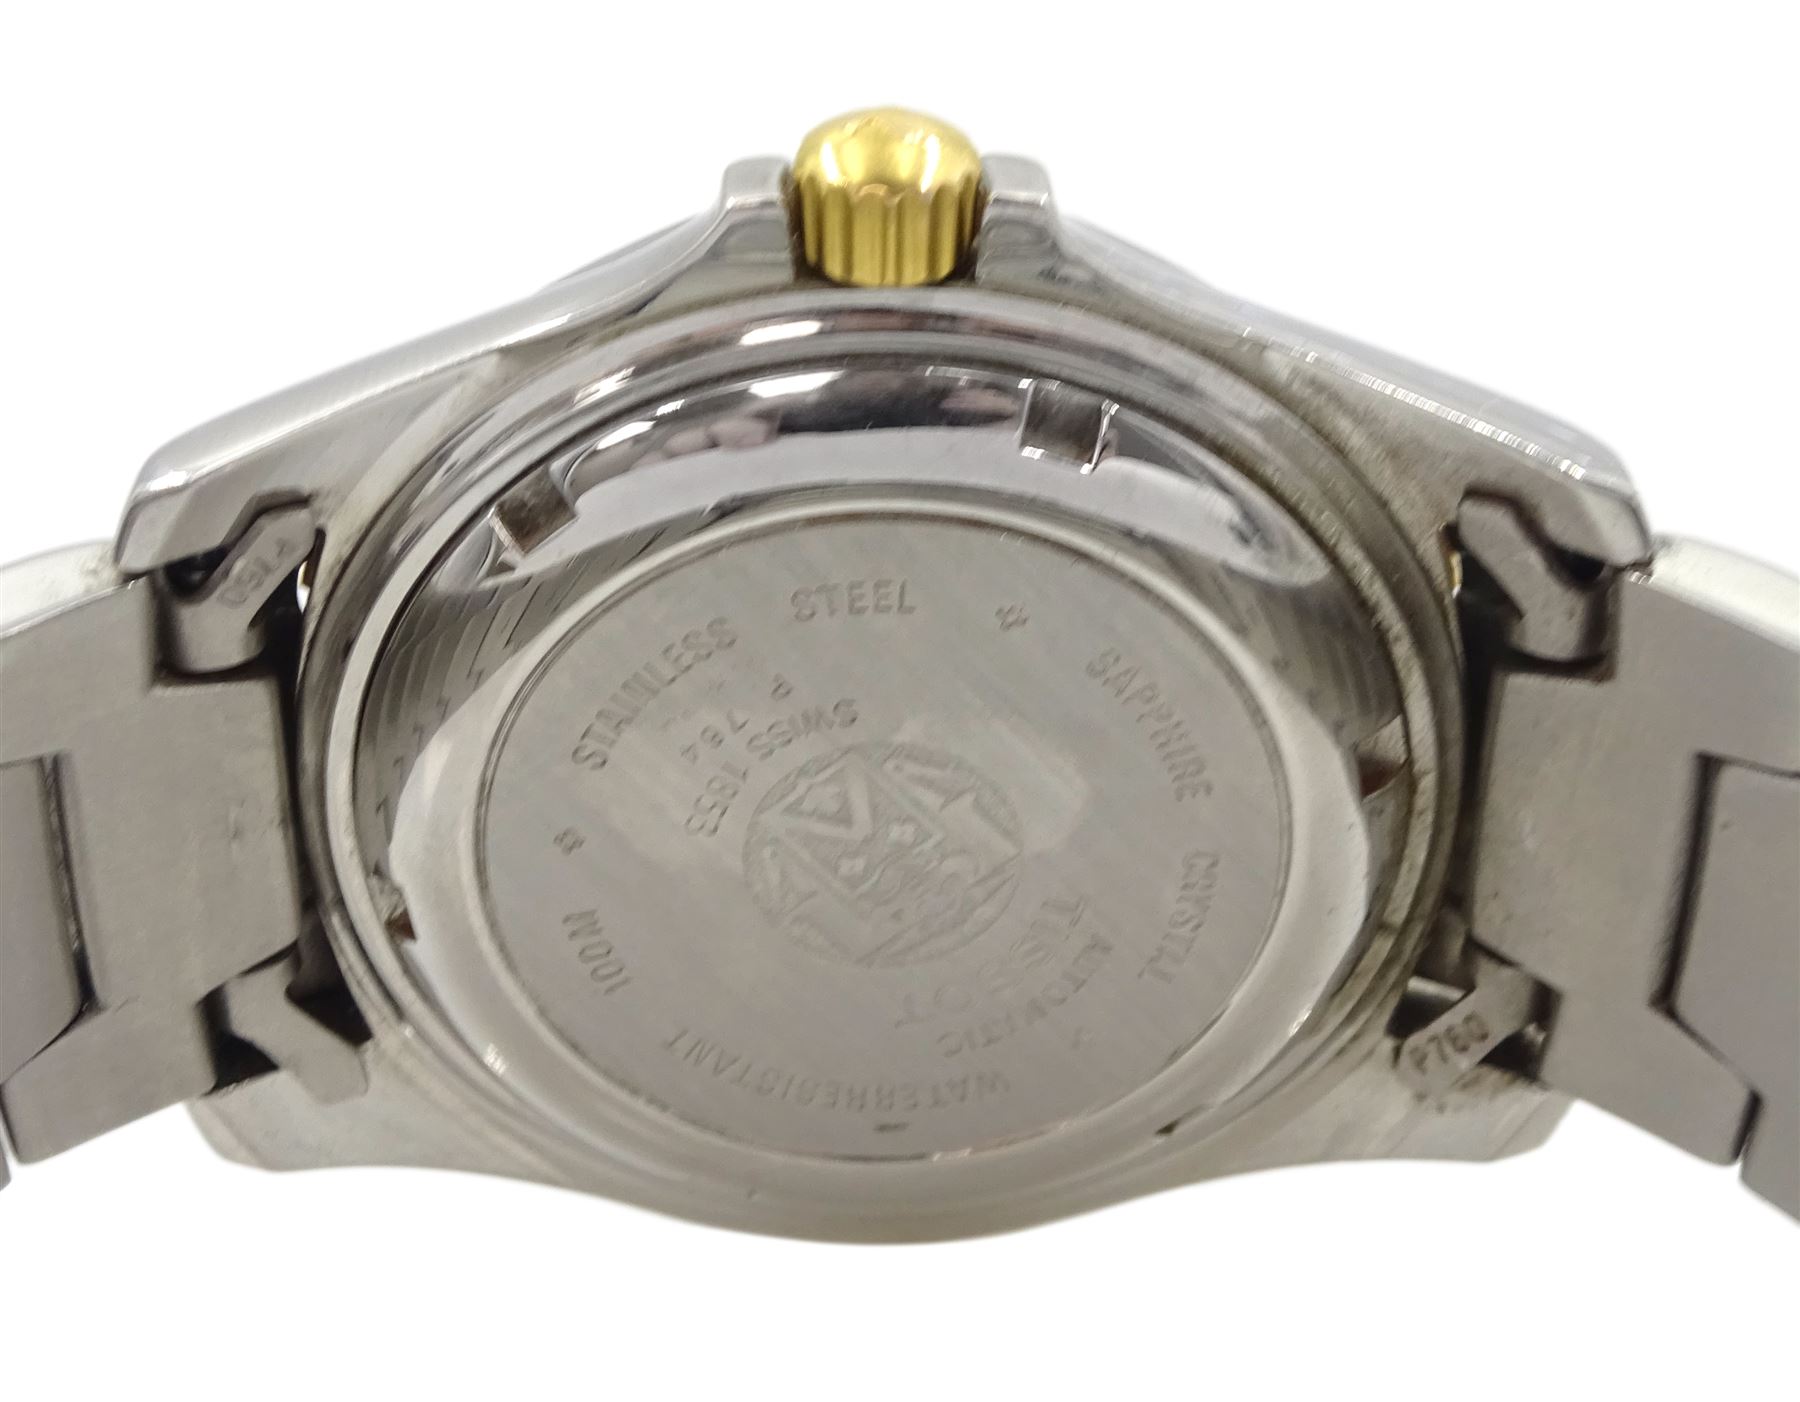 Tissot PR 100 gentleman's stainless steel automatic wristwatch - Image 3 of 3